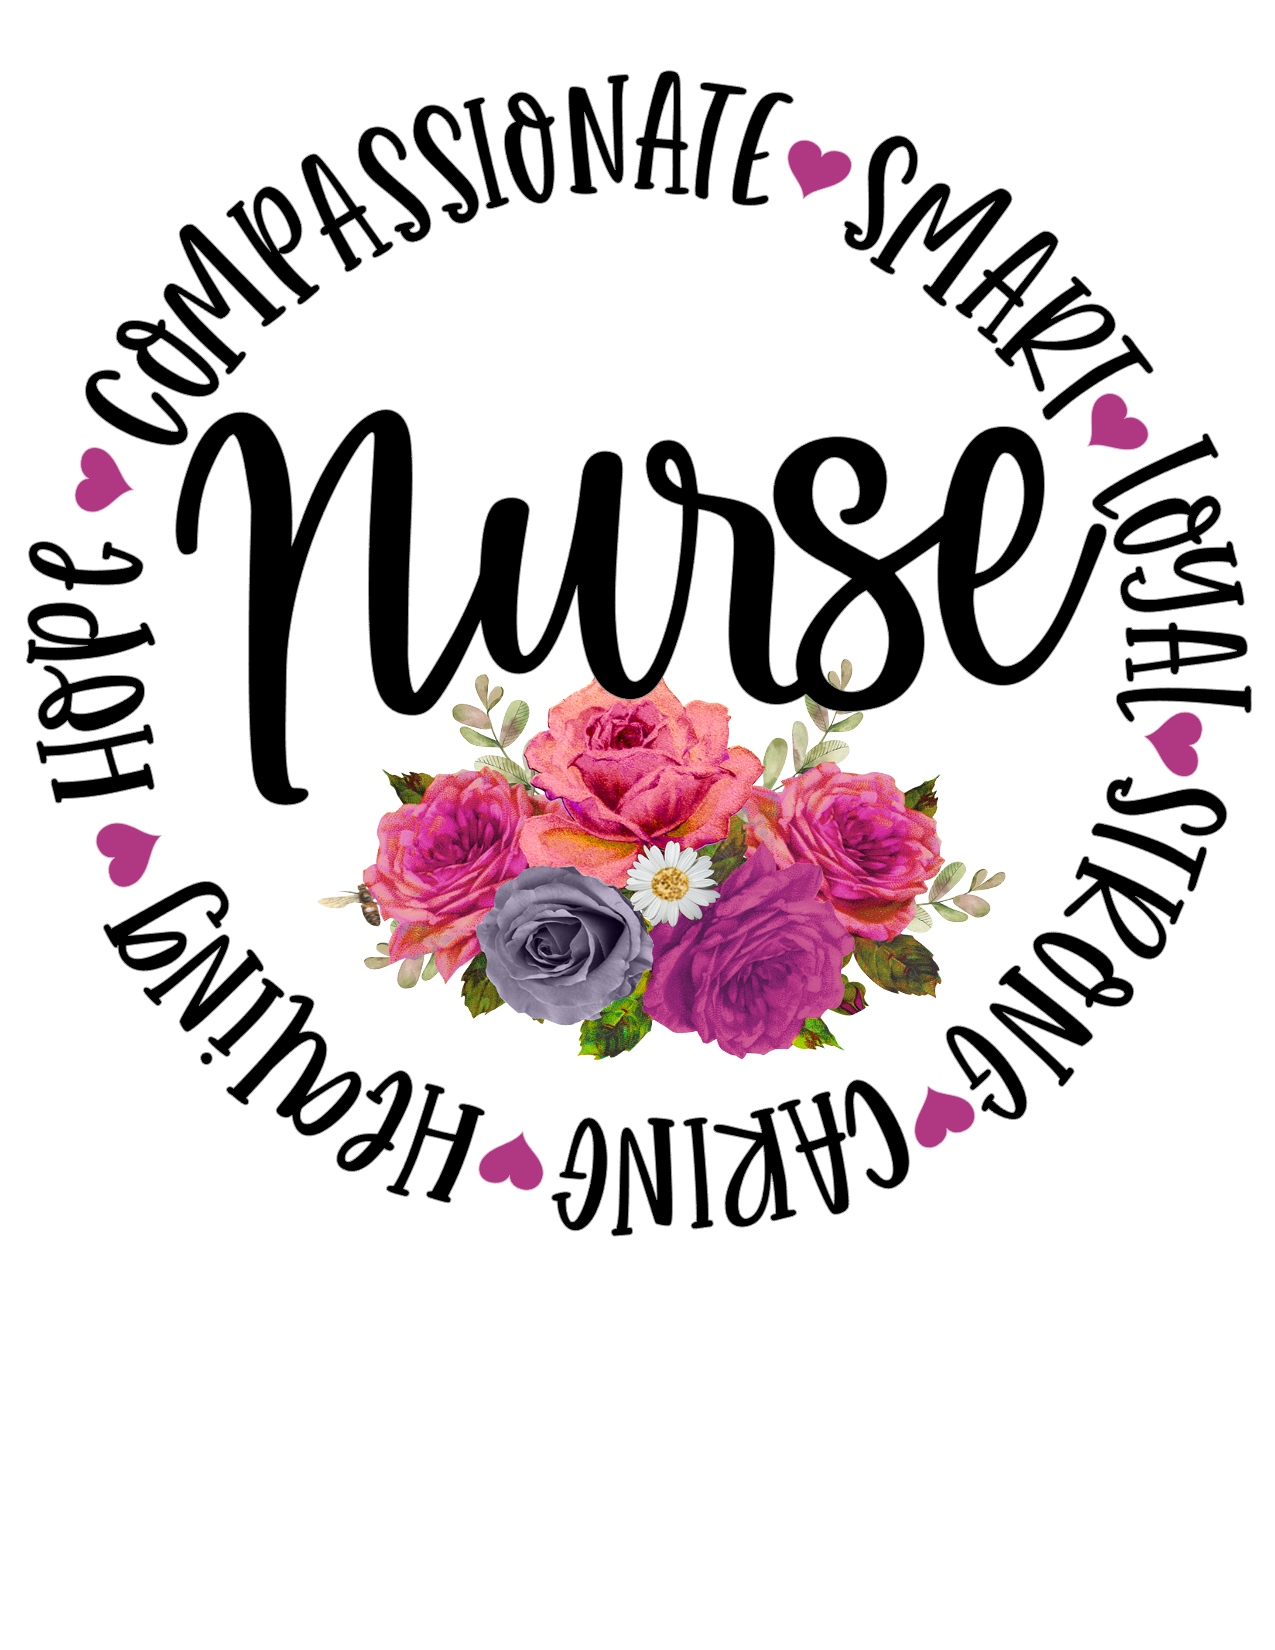 #319 Nurse Compassionate Smart Loyal Strong Healing Hope